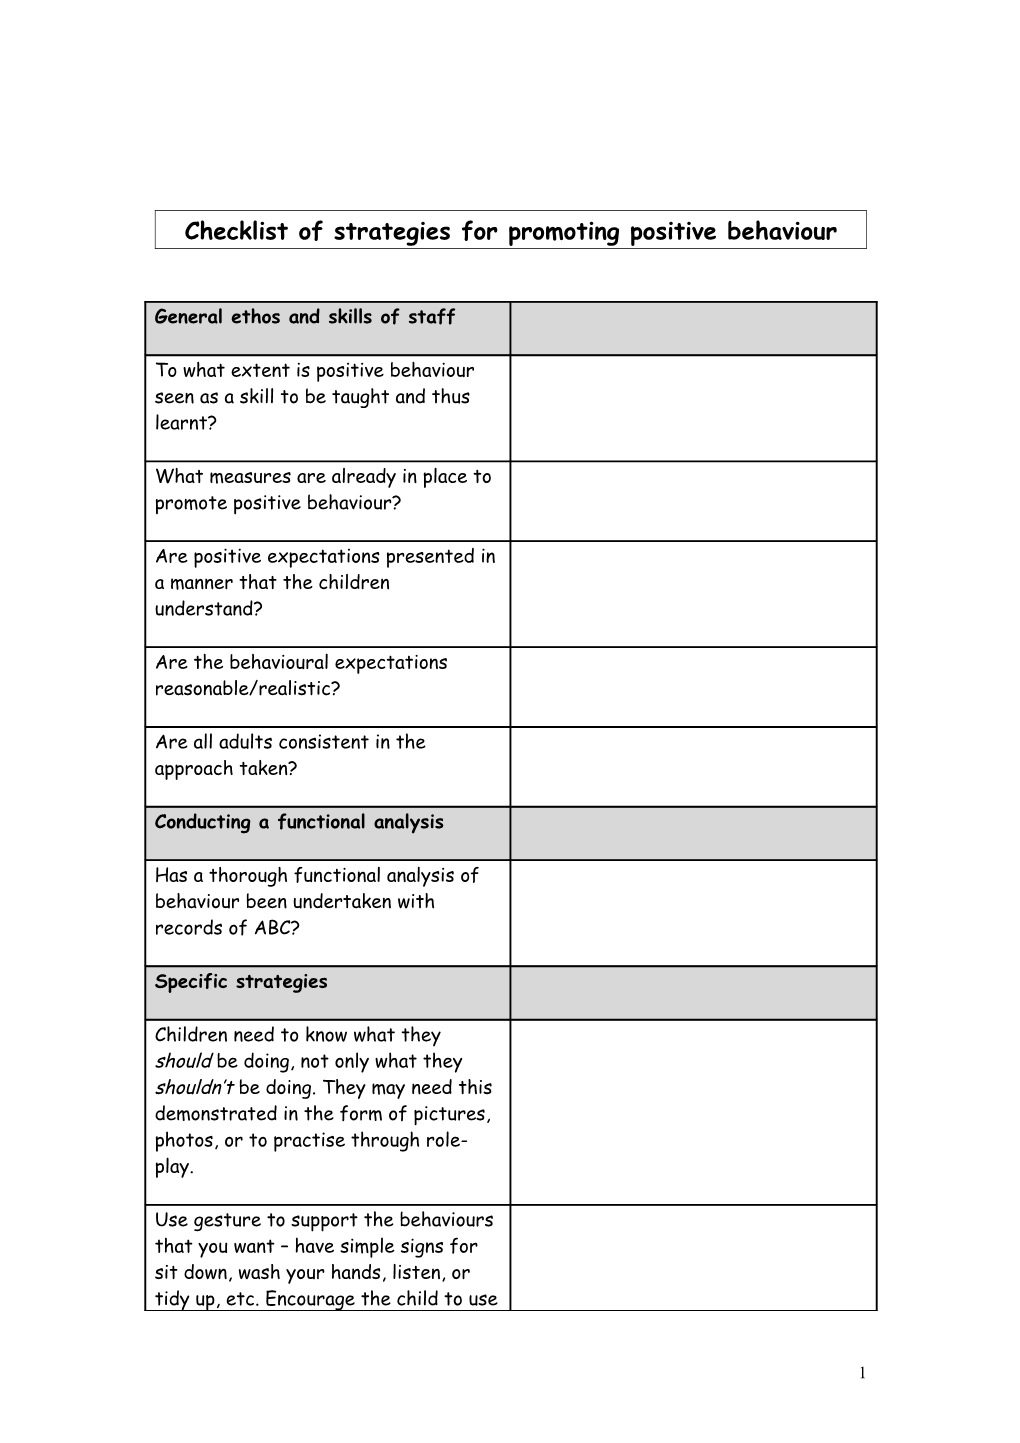 Checklist of Strategies